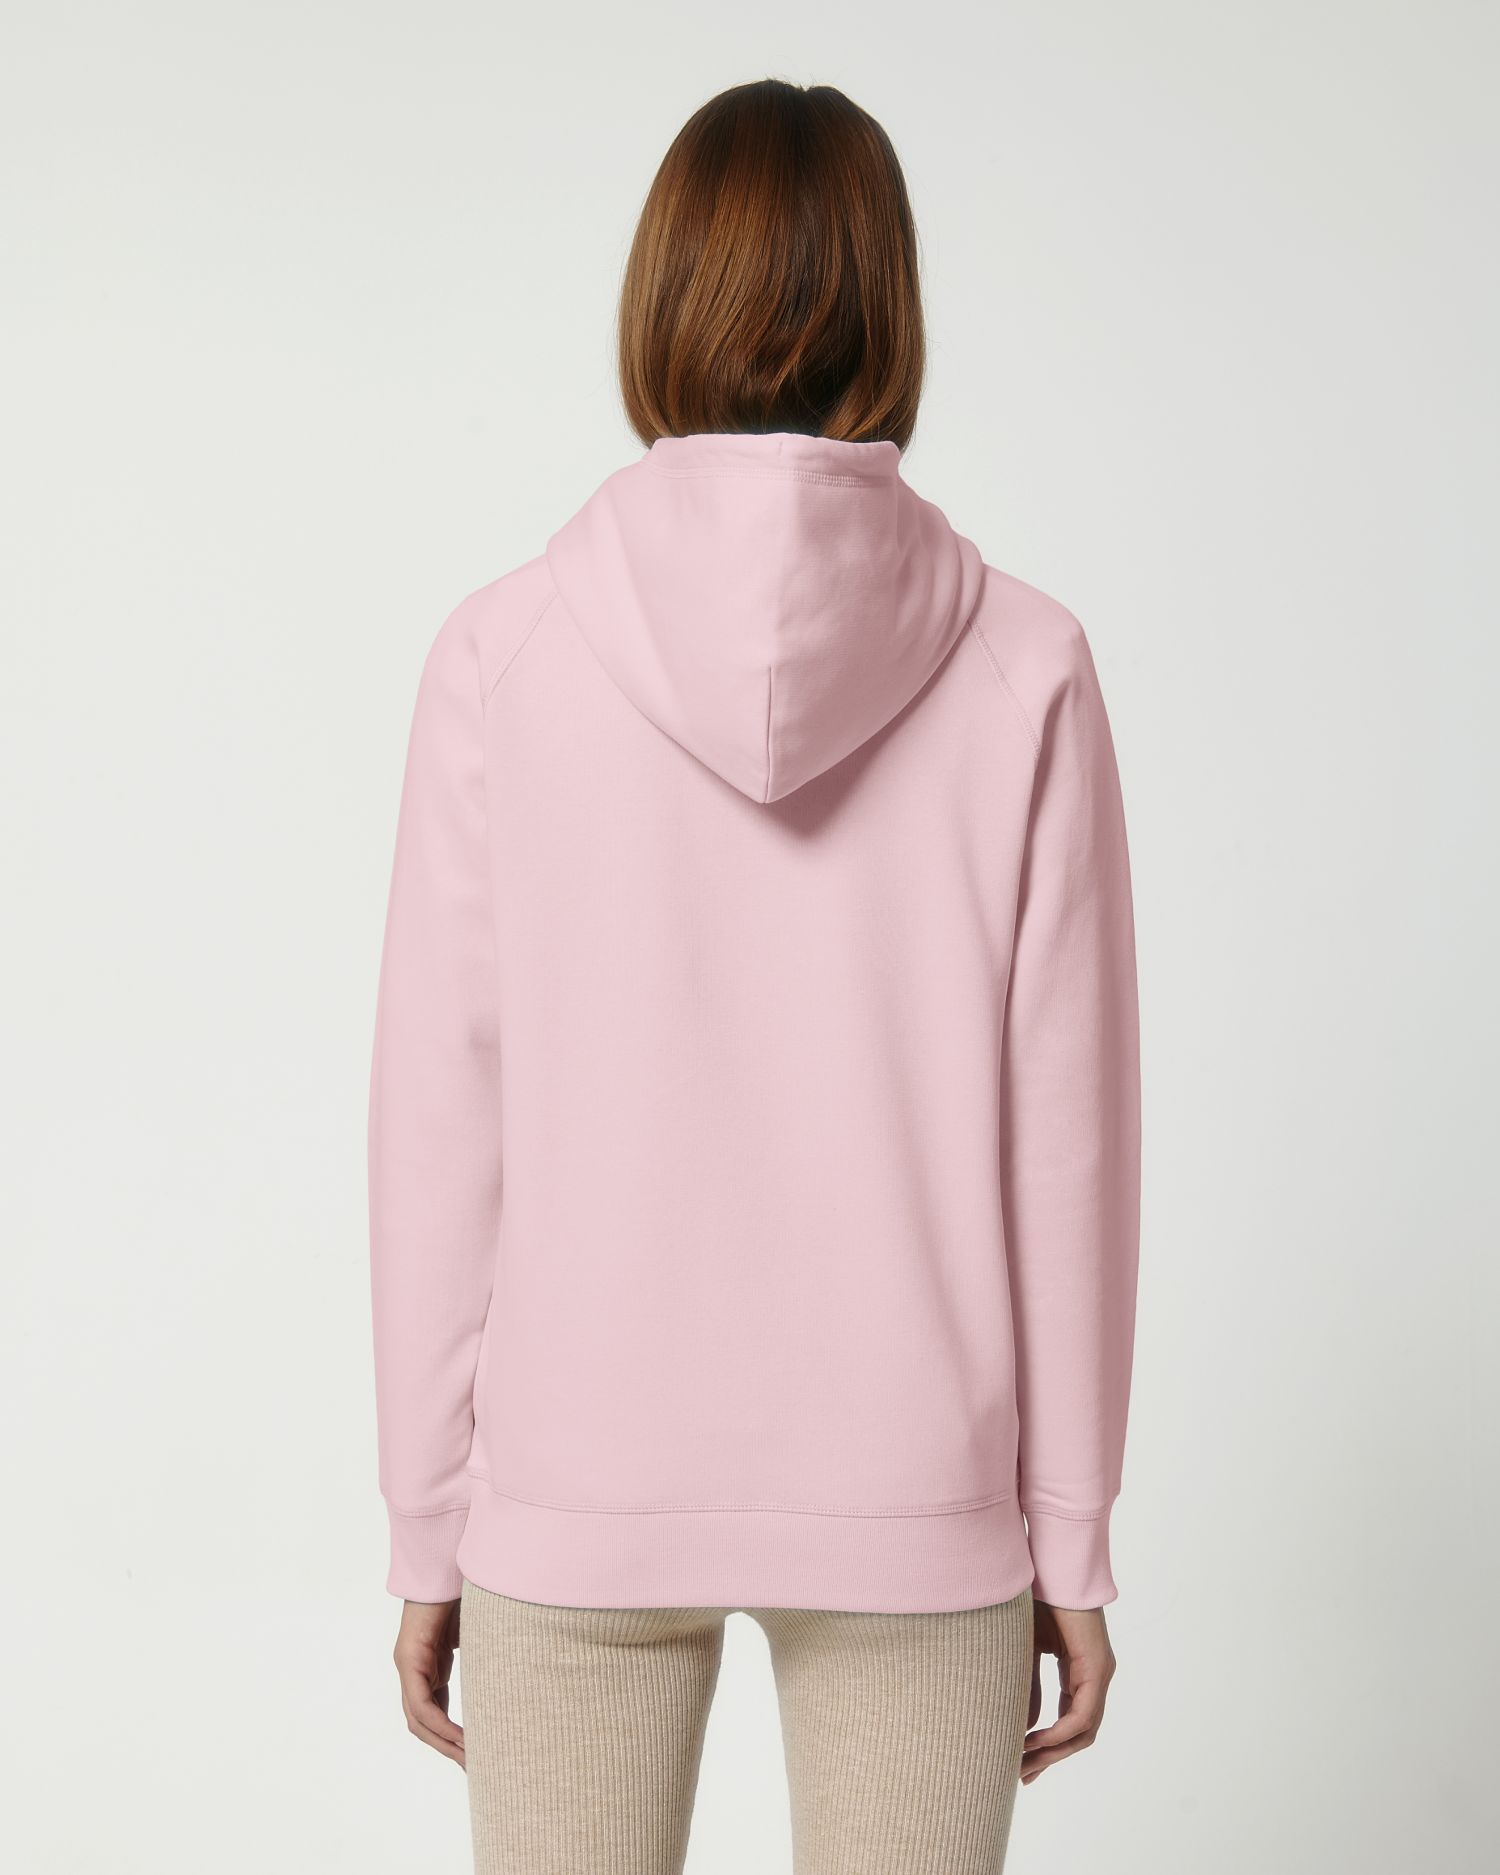 Hoodie sweatshirts Sider in Farbe Cotton Pink